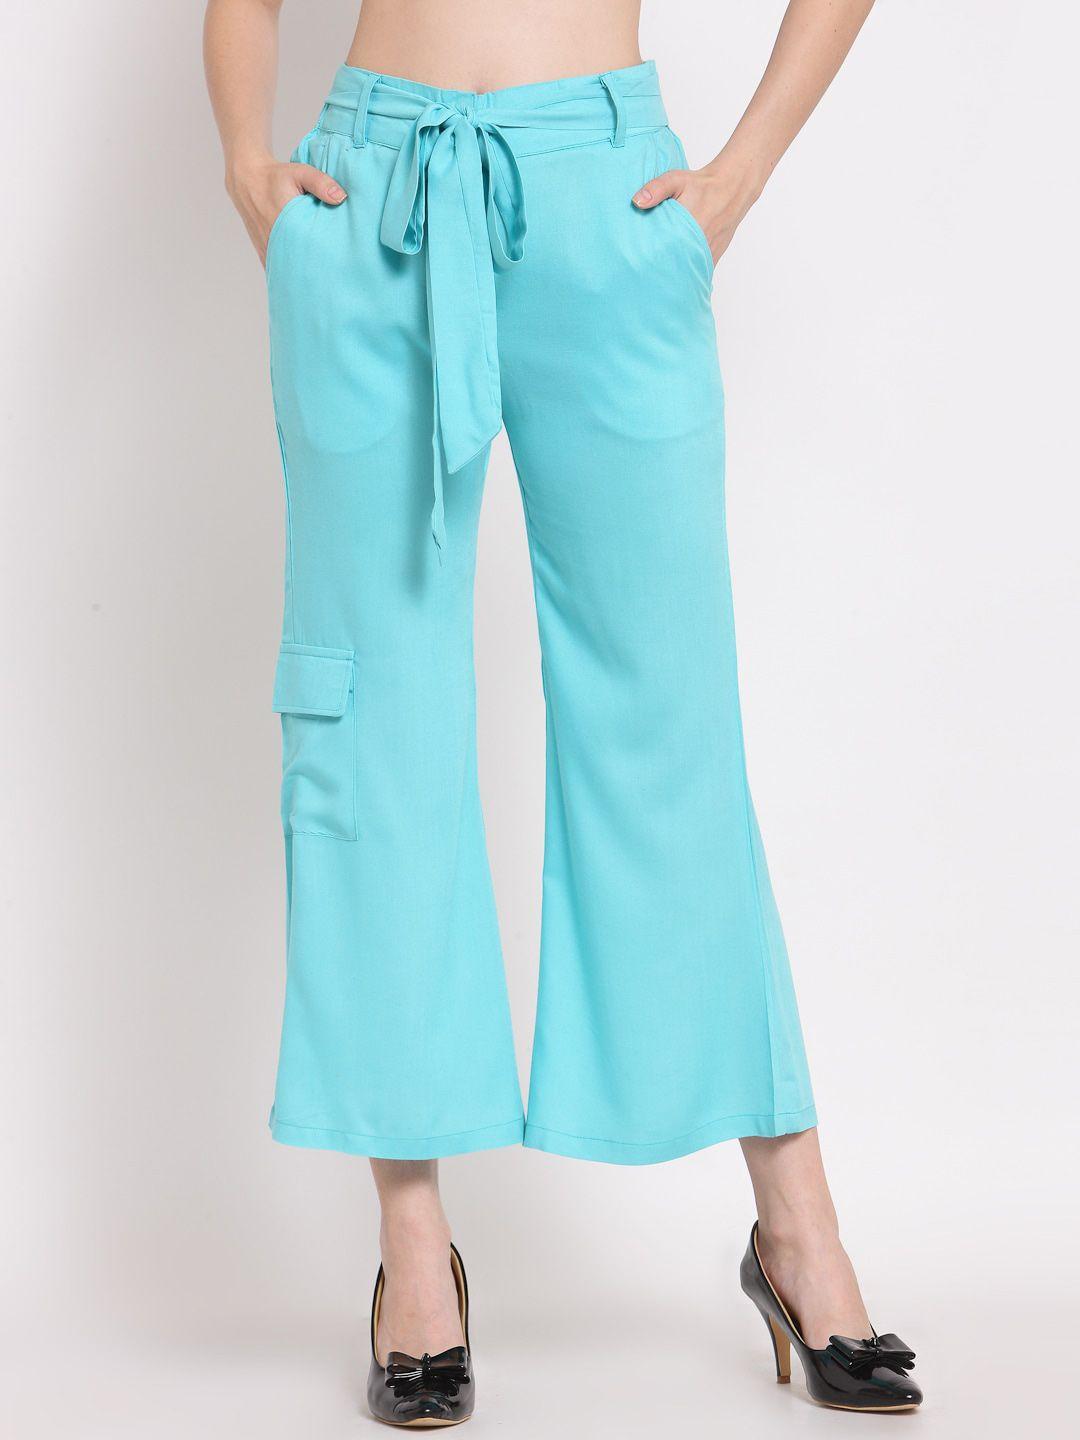 patrorna-women-smart-fit-culottes-trousers